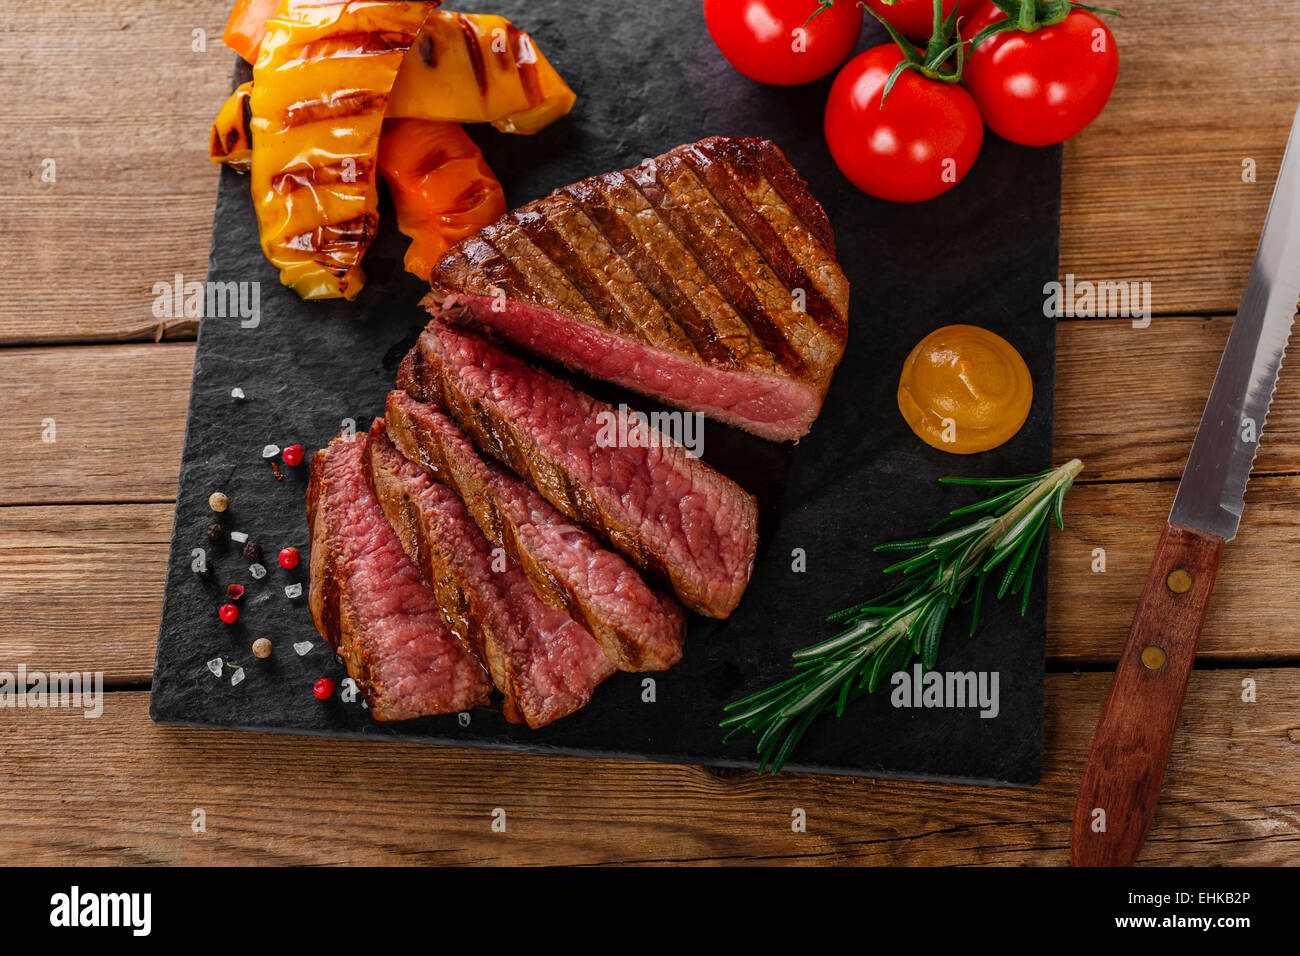 Grigliate di carne di manzo tagliata a fette rare con verdure Foto Stock